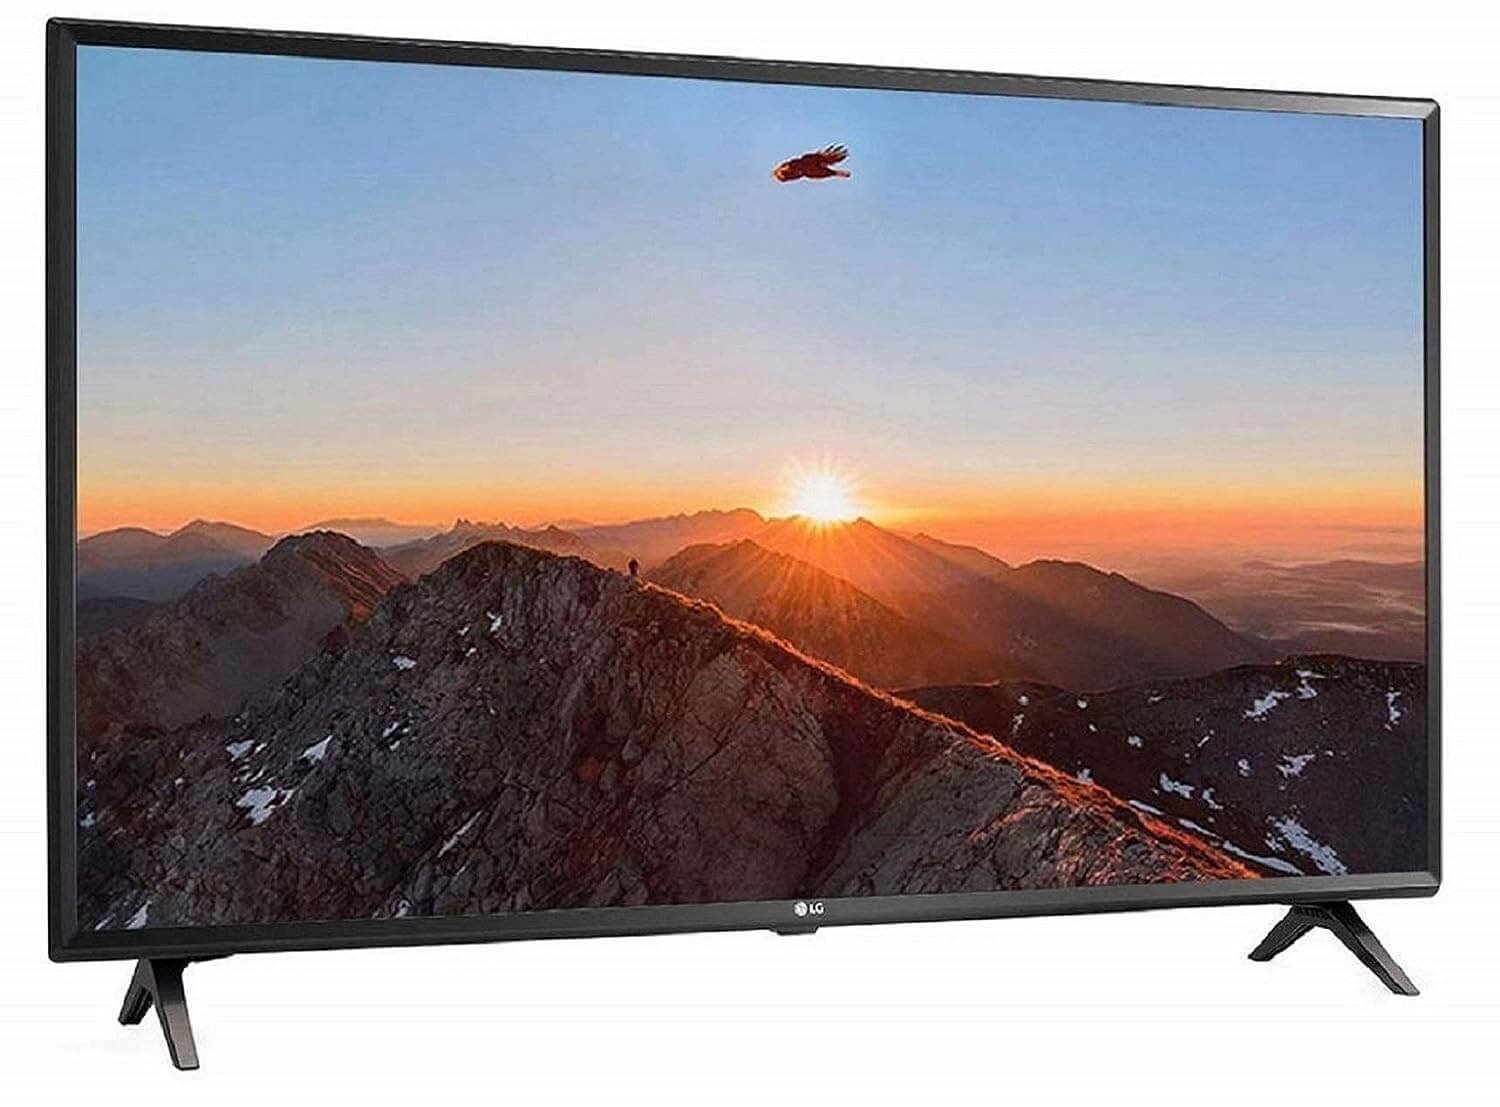 LG 49 Inch 4K UHD IPS LED TV Review